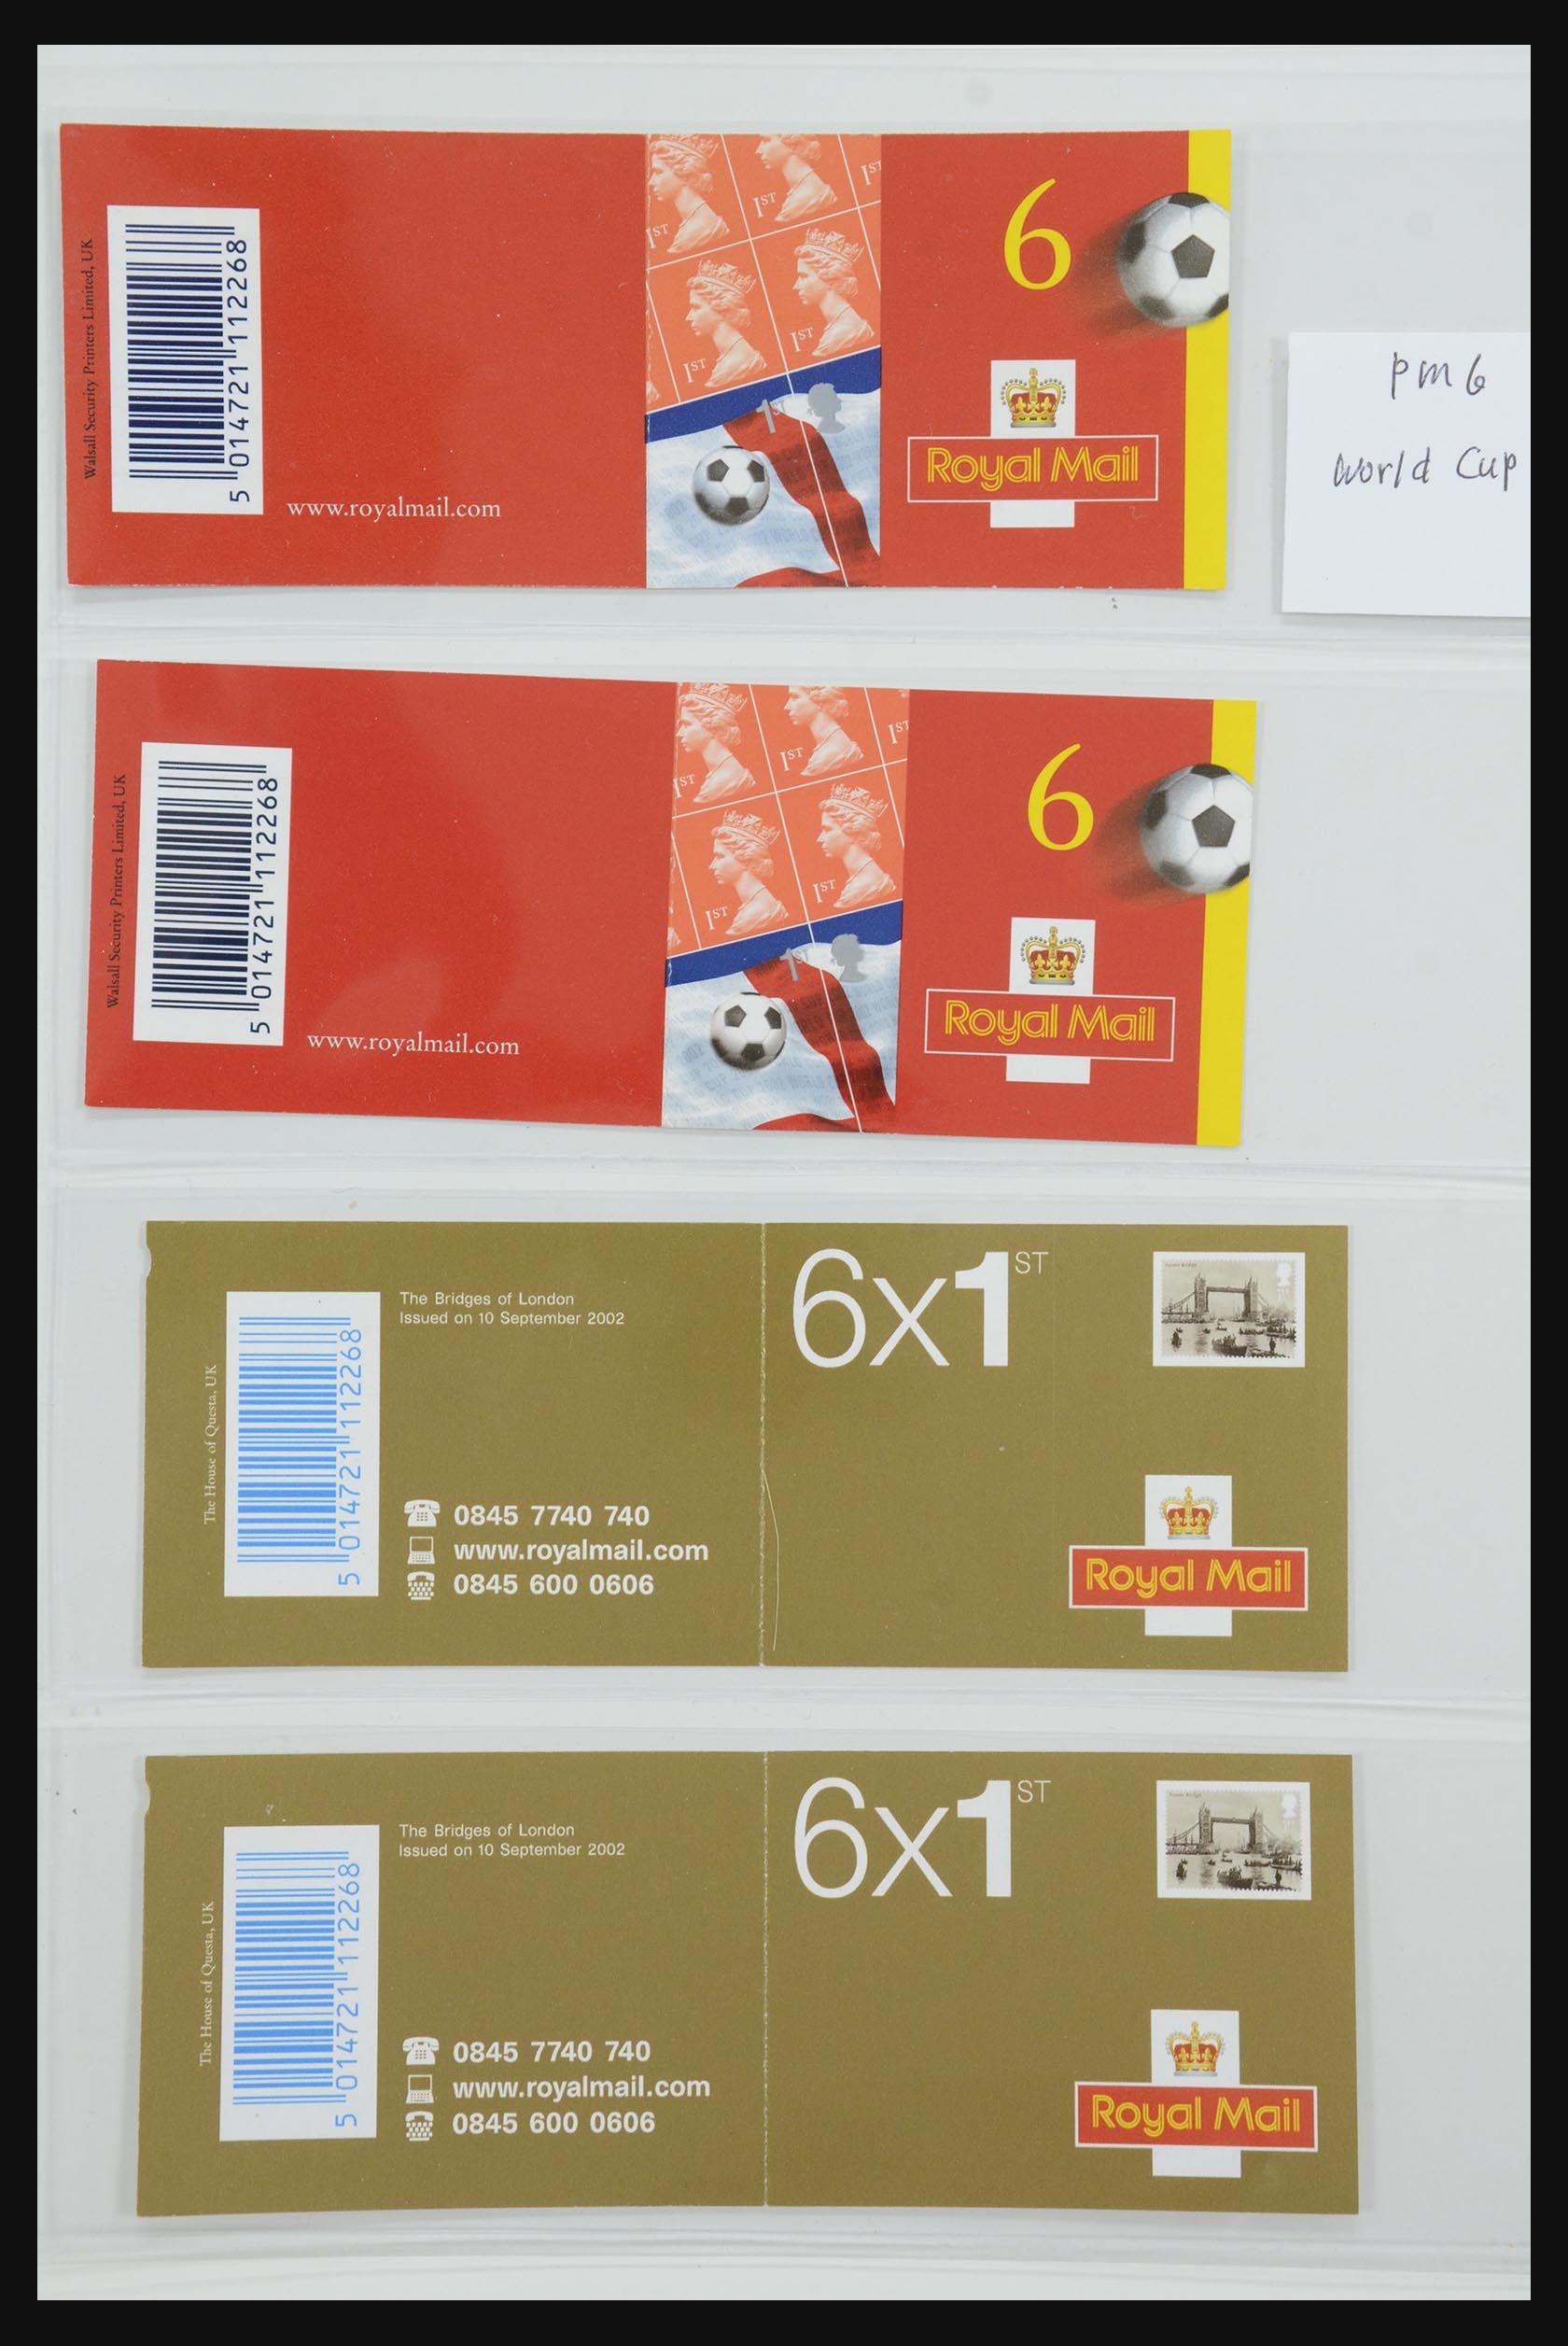 31959 367 - 31959 Great Britain stampbooklets 1987-2016!!